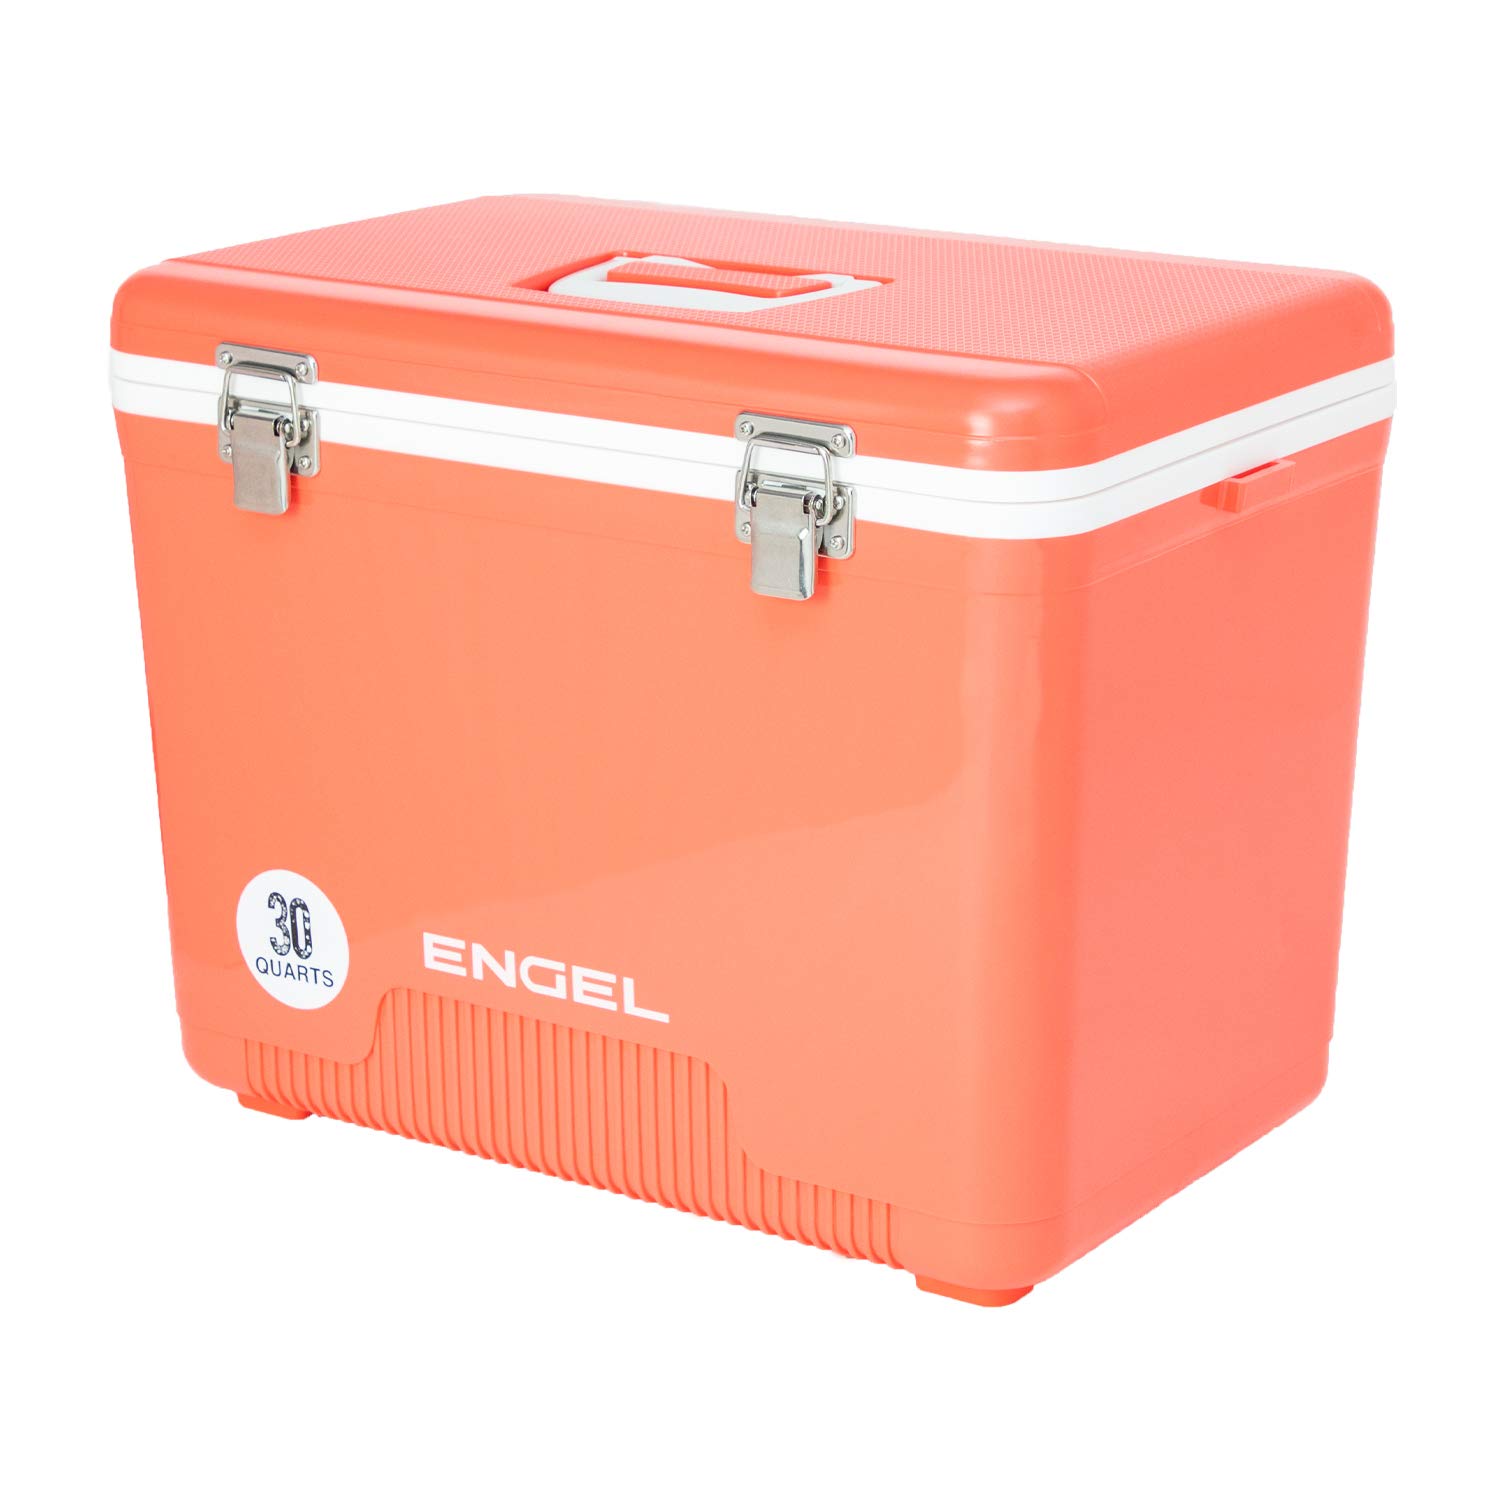 Engel UC30CR 30クォート 48缶漏れ防止 防臭 断熱クーラードライボックス ショルダーストラップ